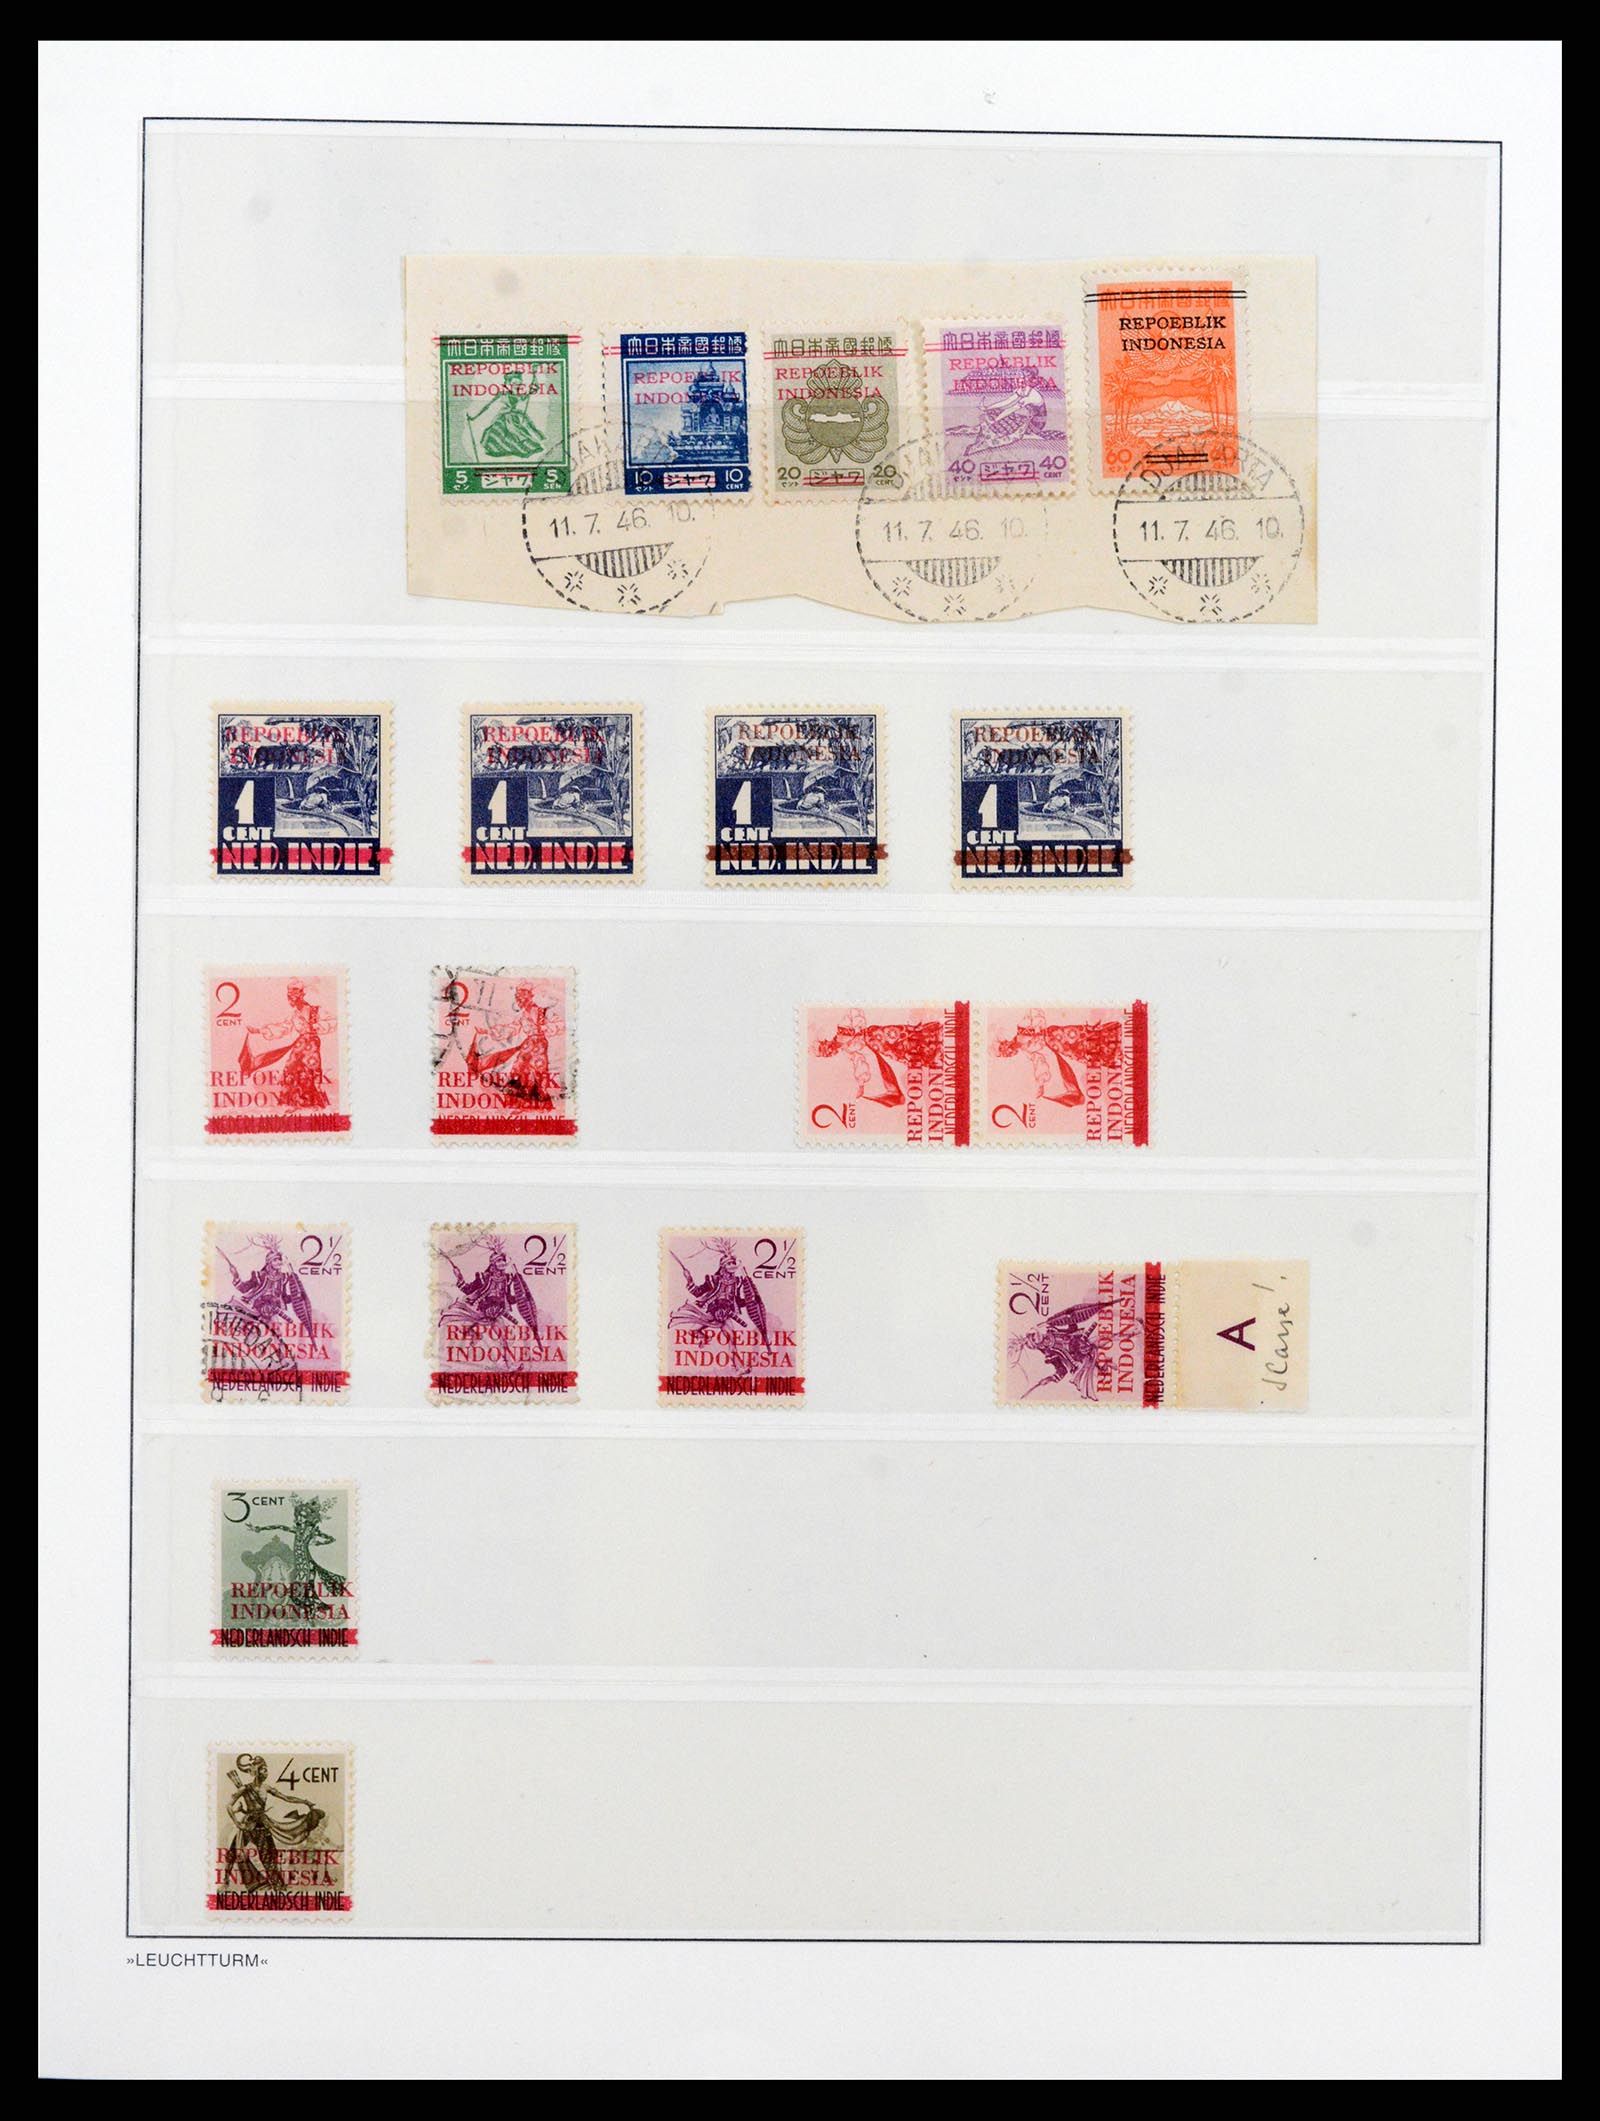 37435 007 - Stamp collection 37435 Indonesia interim period 1945-1948.